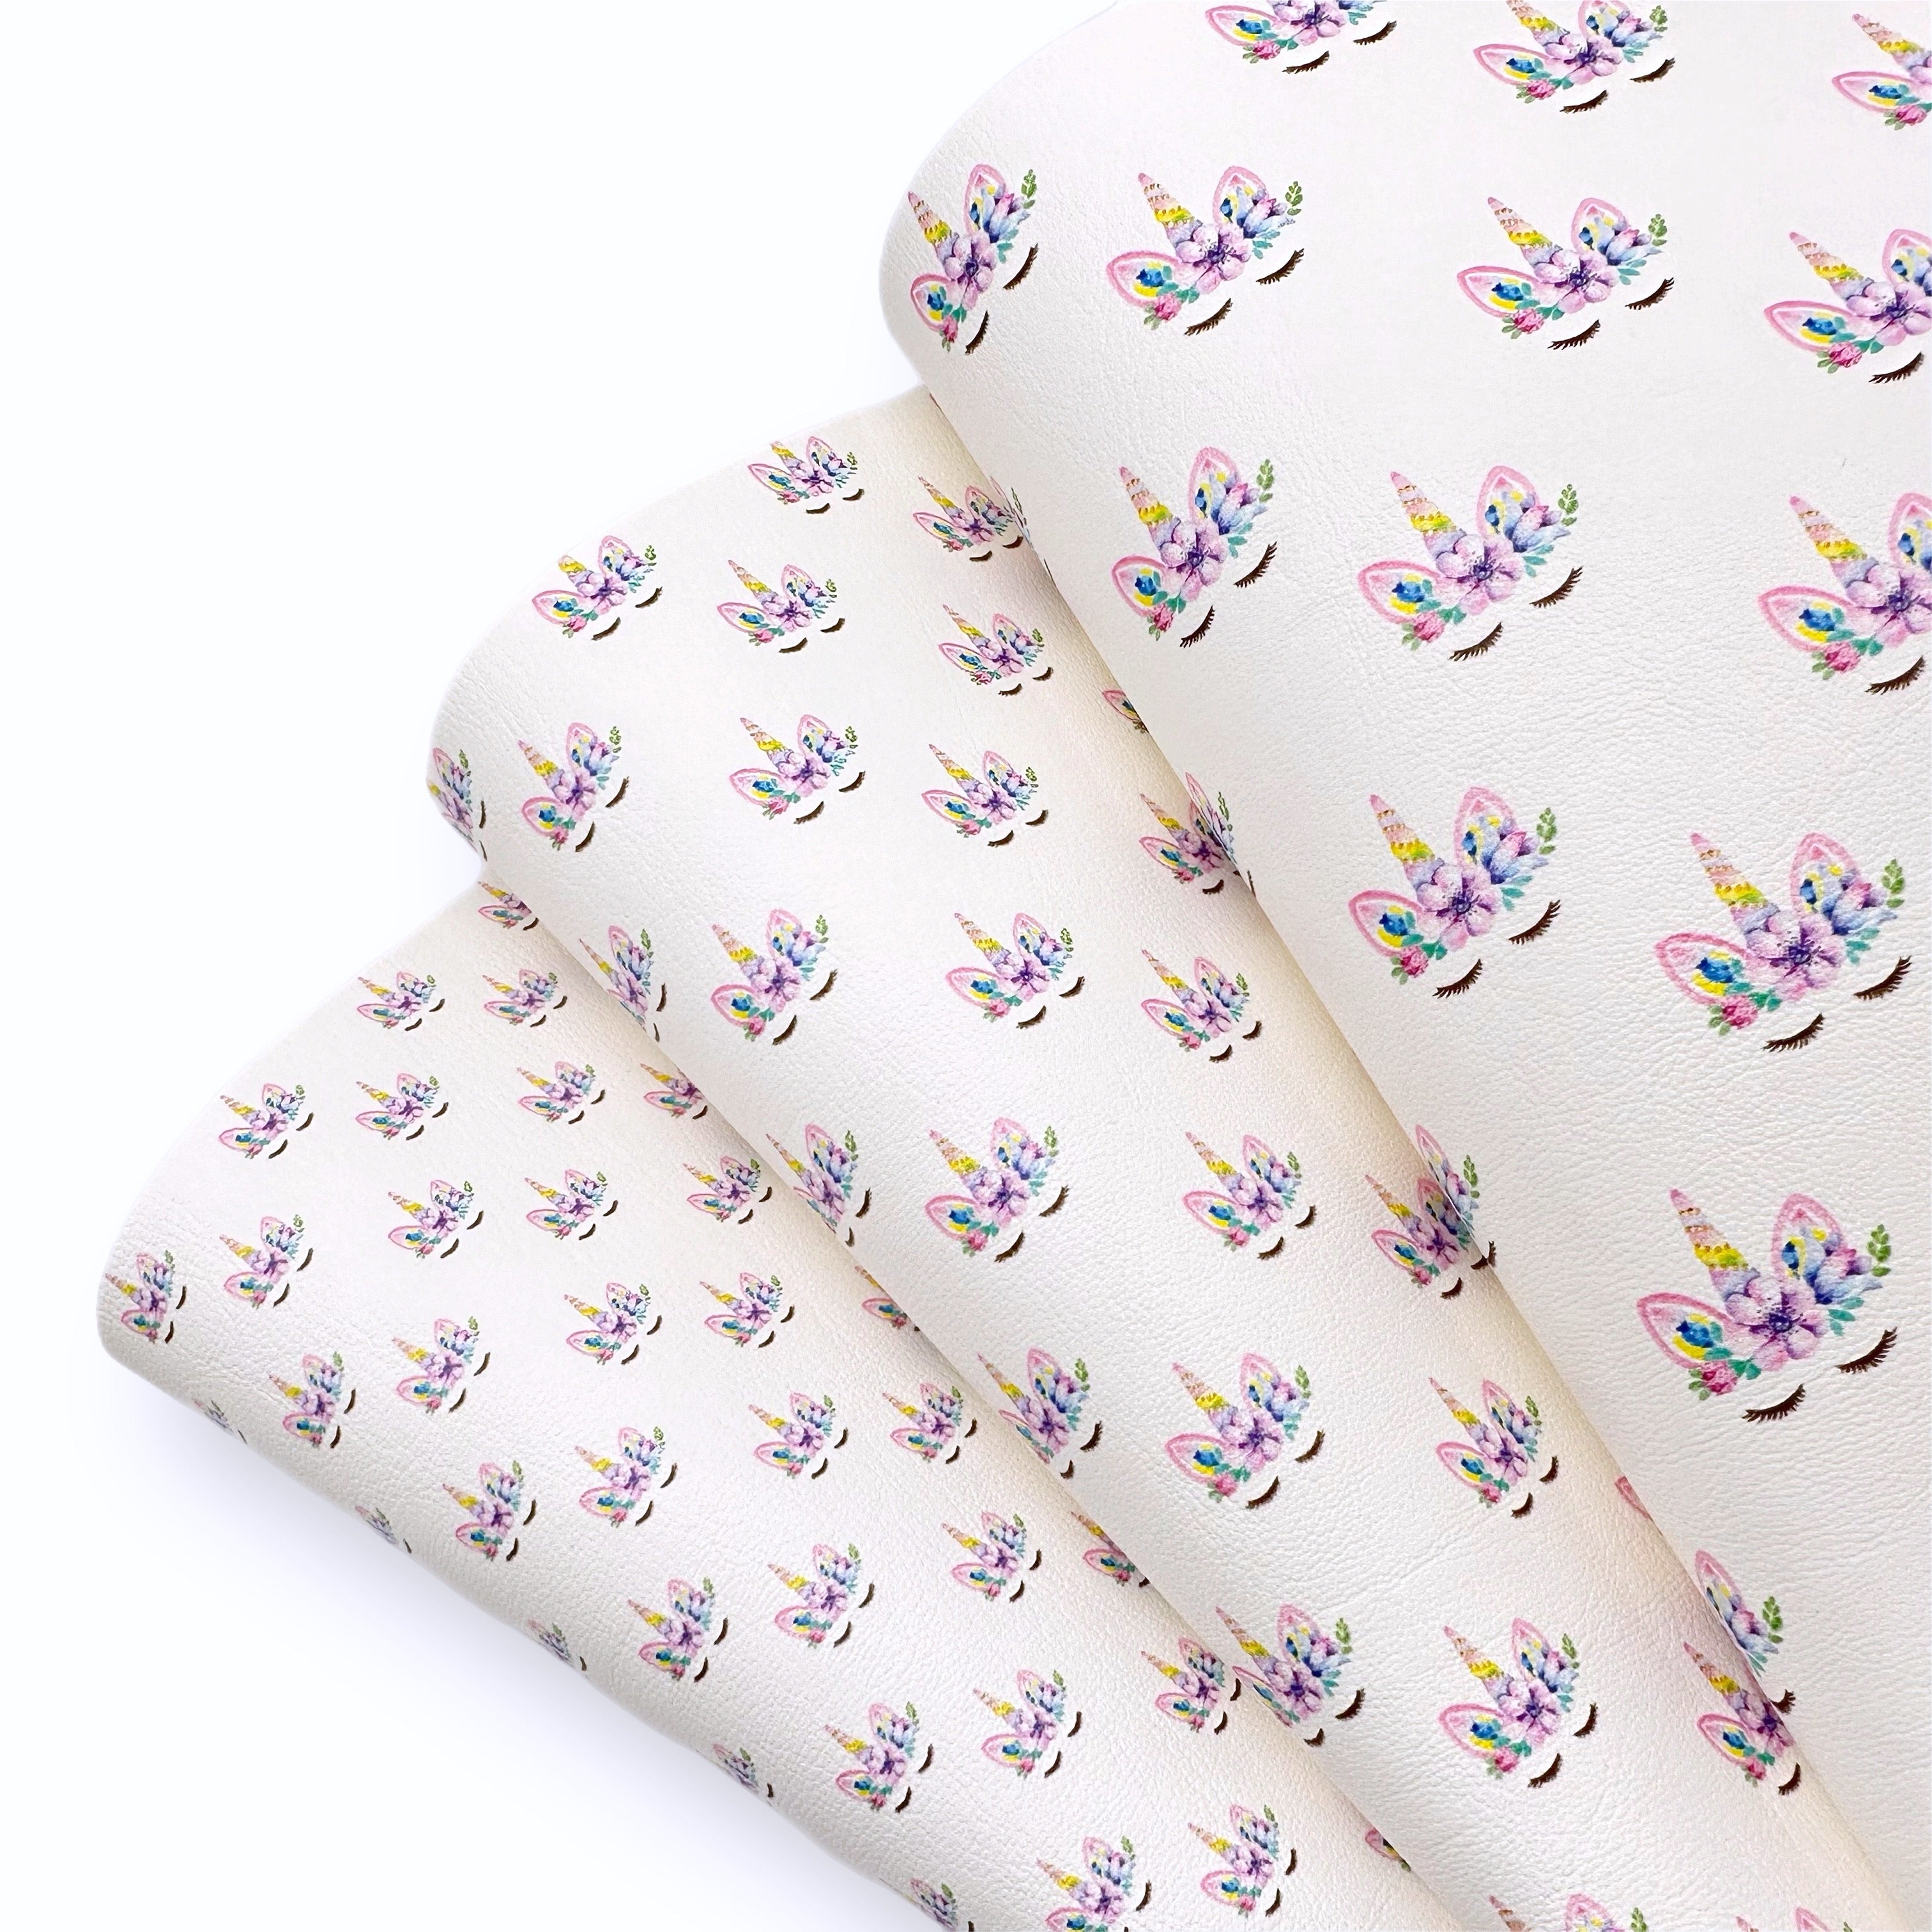 Sleepy Unicorn Premium Faux Leather Fabric Sheets